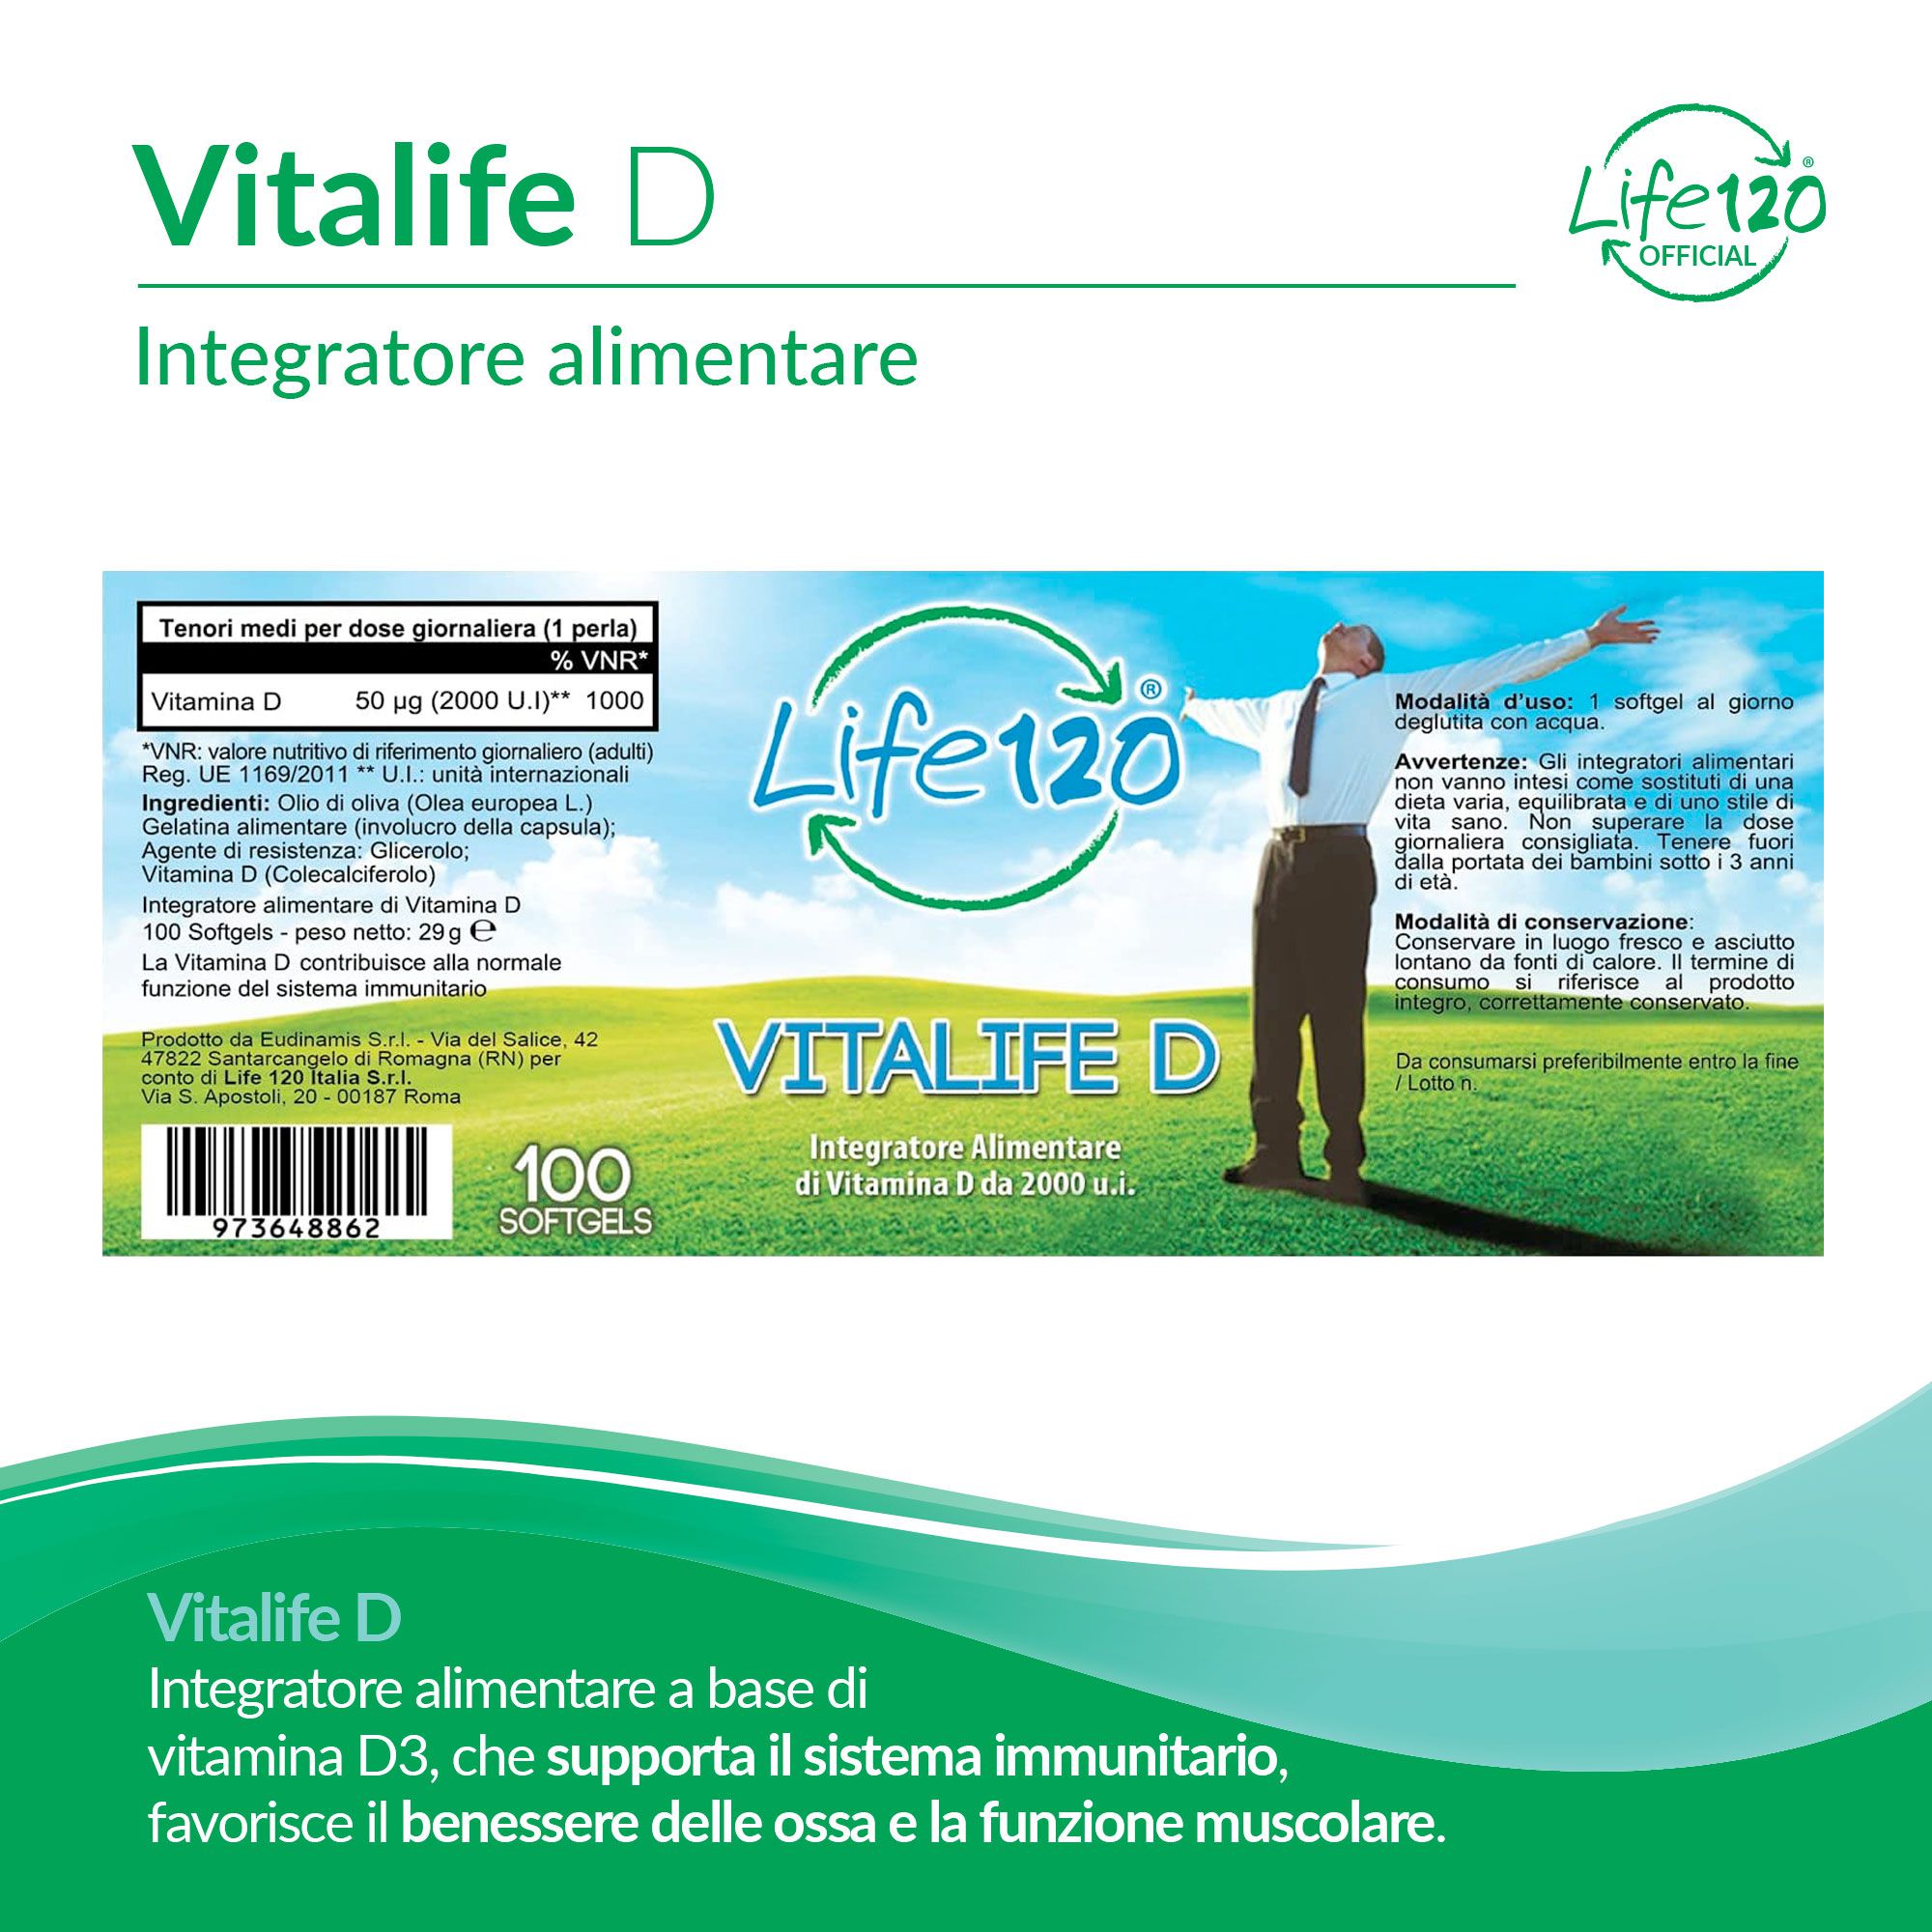 Vitalife D